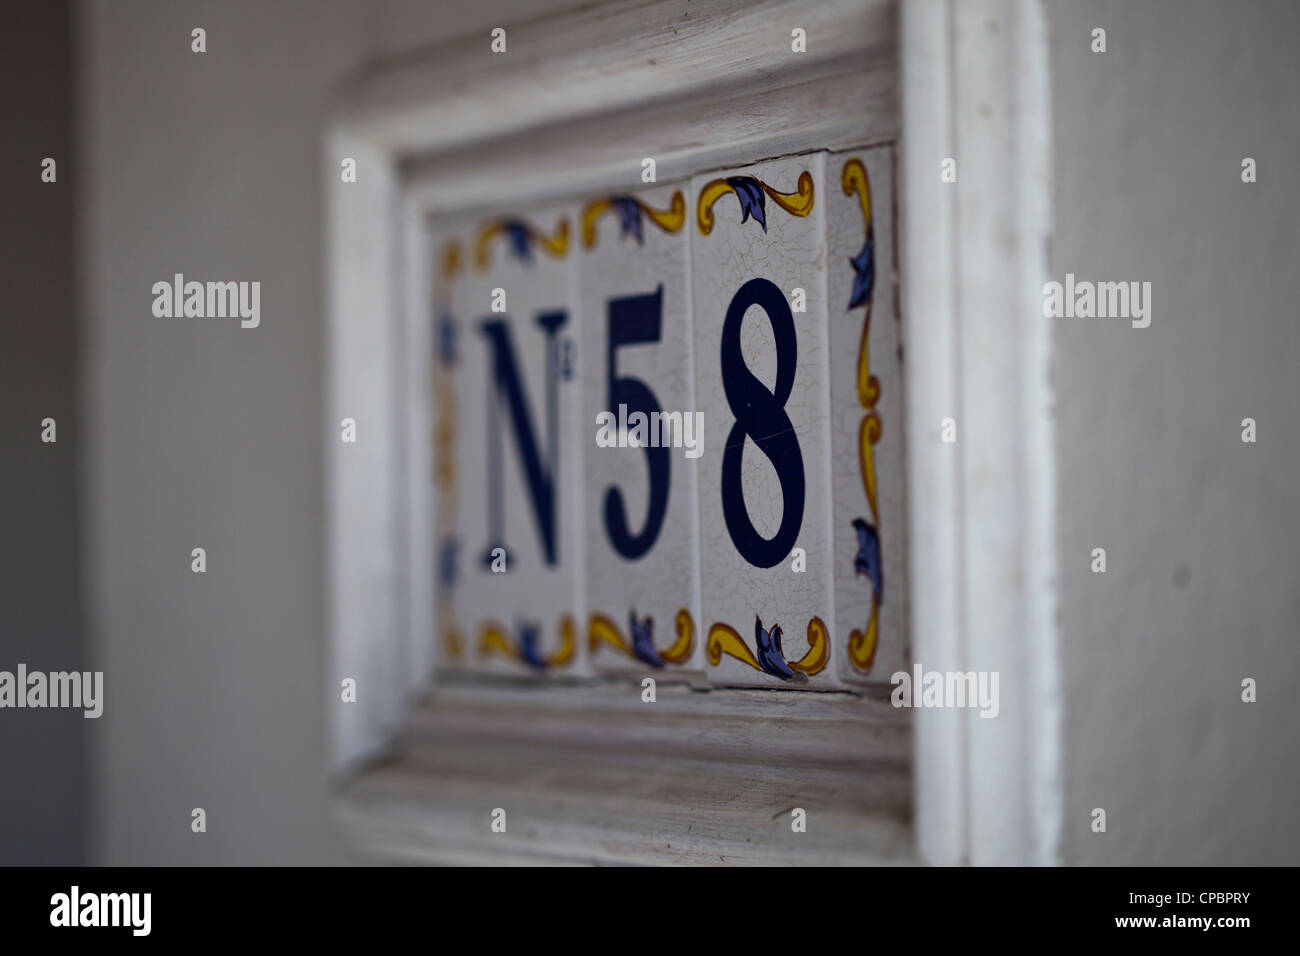 No 58 tile flat identification plaque. Stock Photo